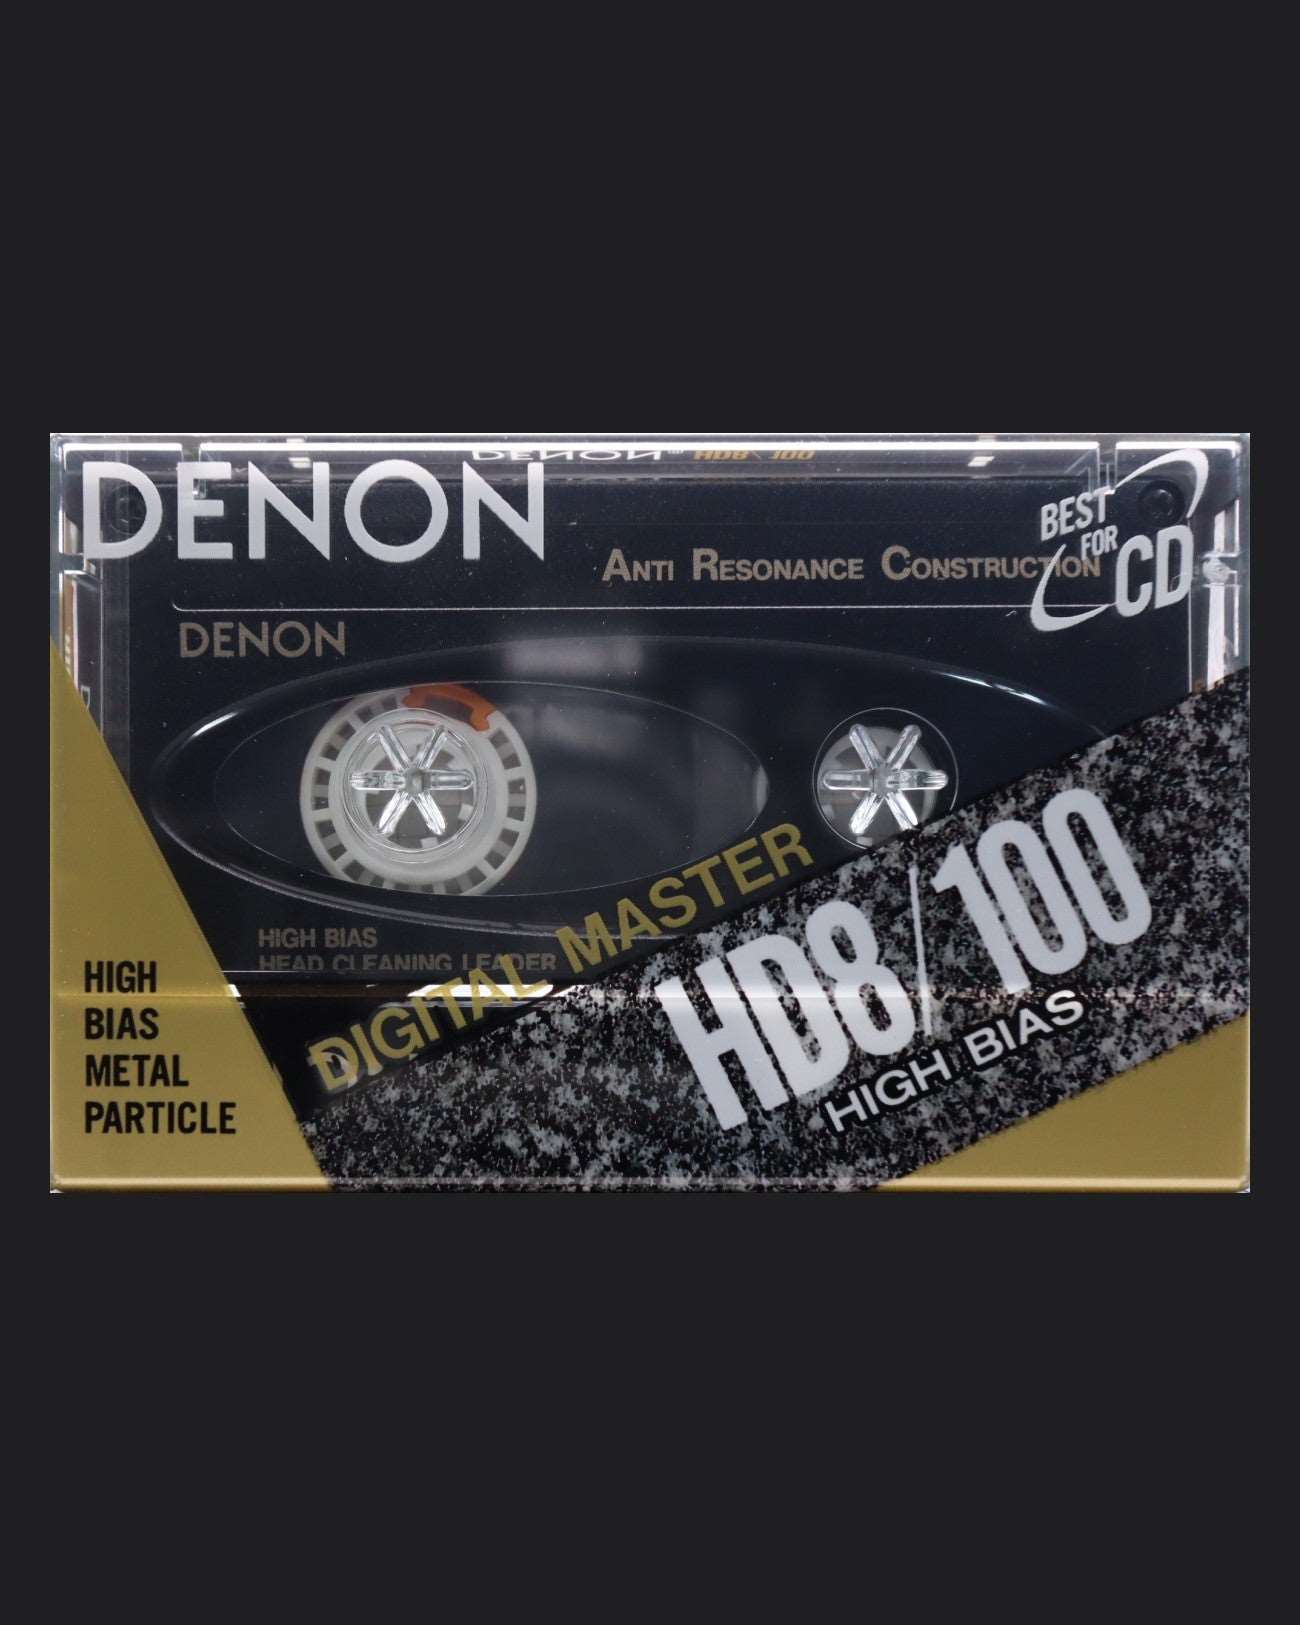 Denon HD8 (1990-1991 US)